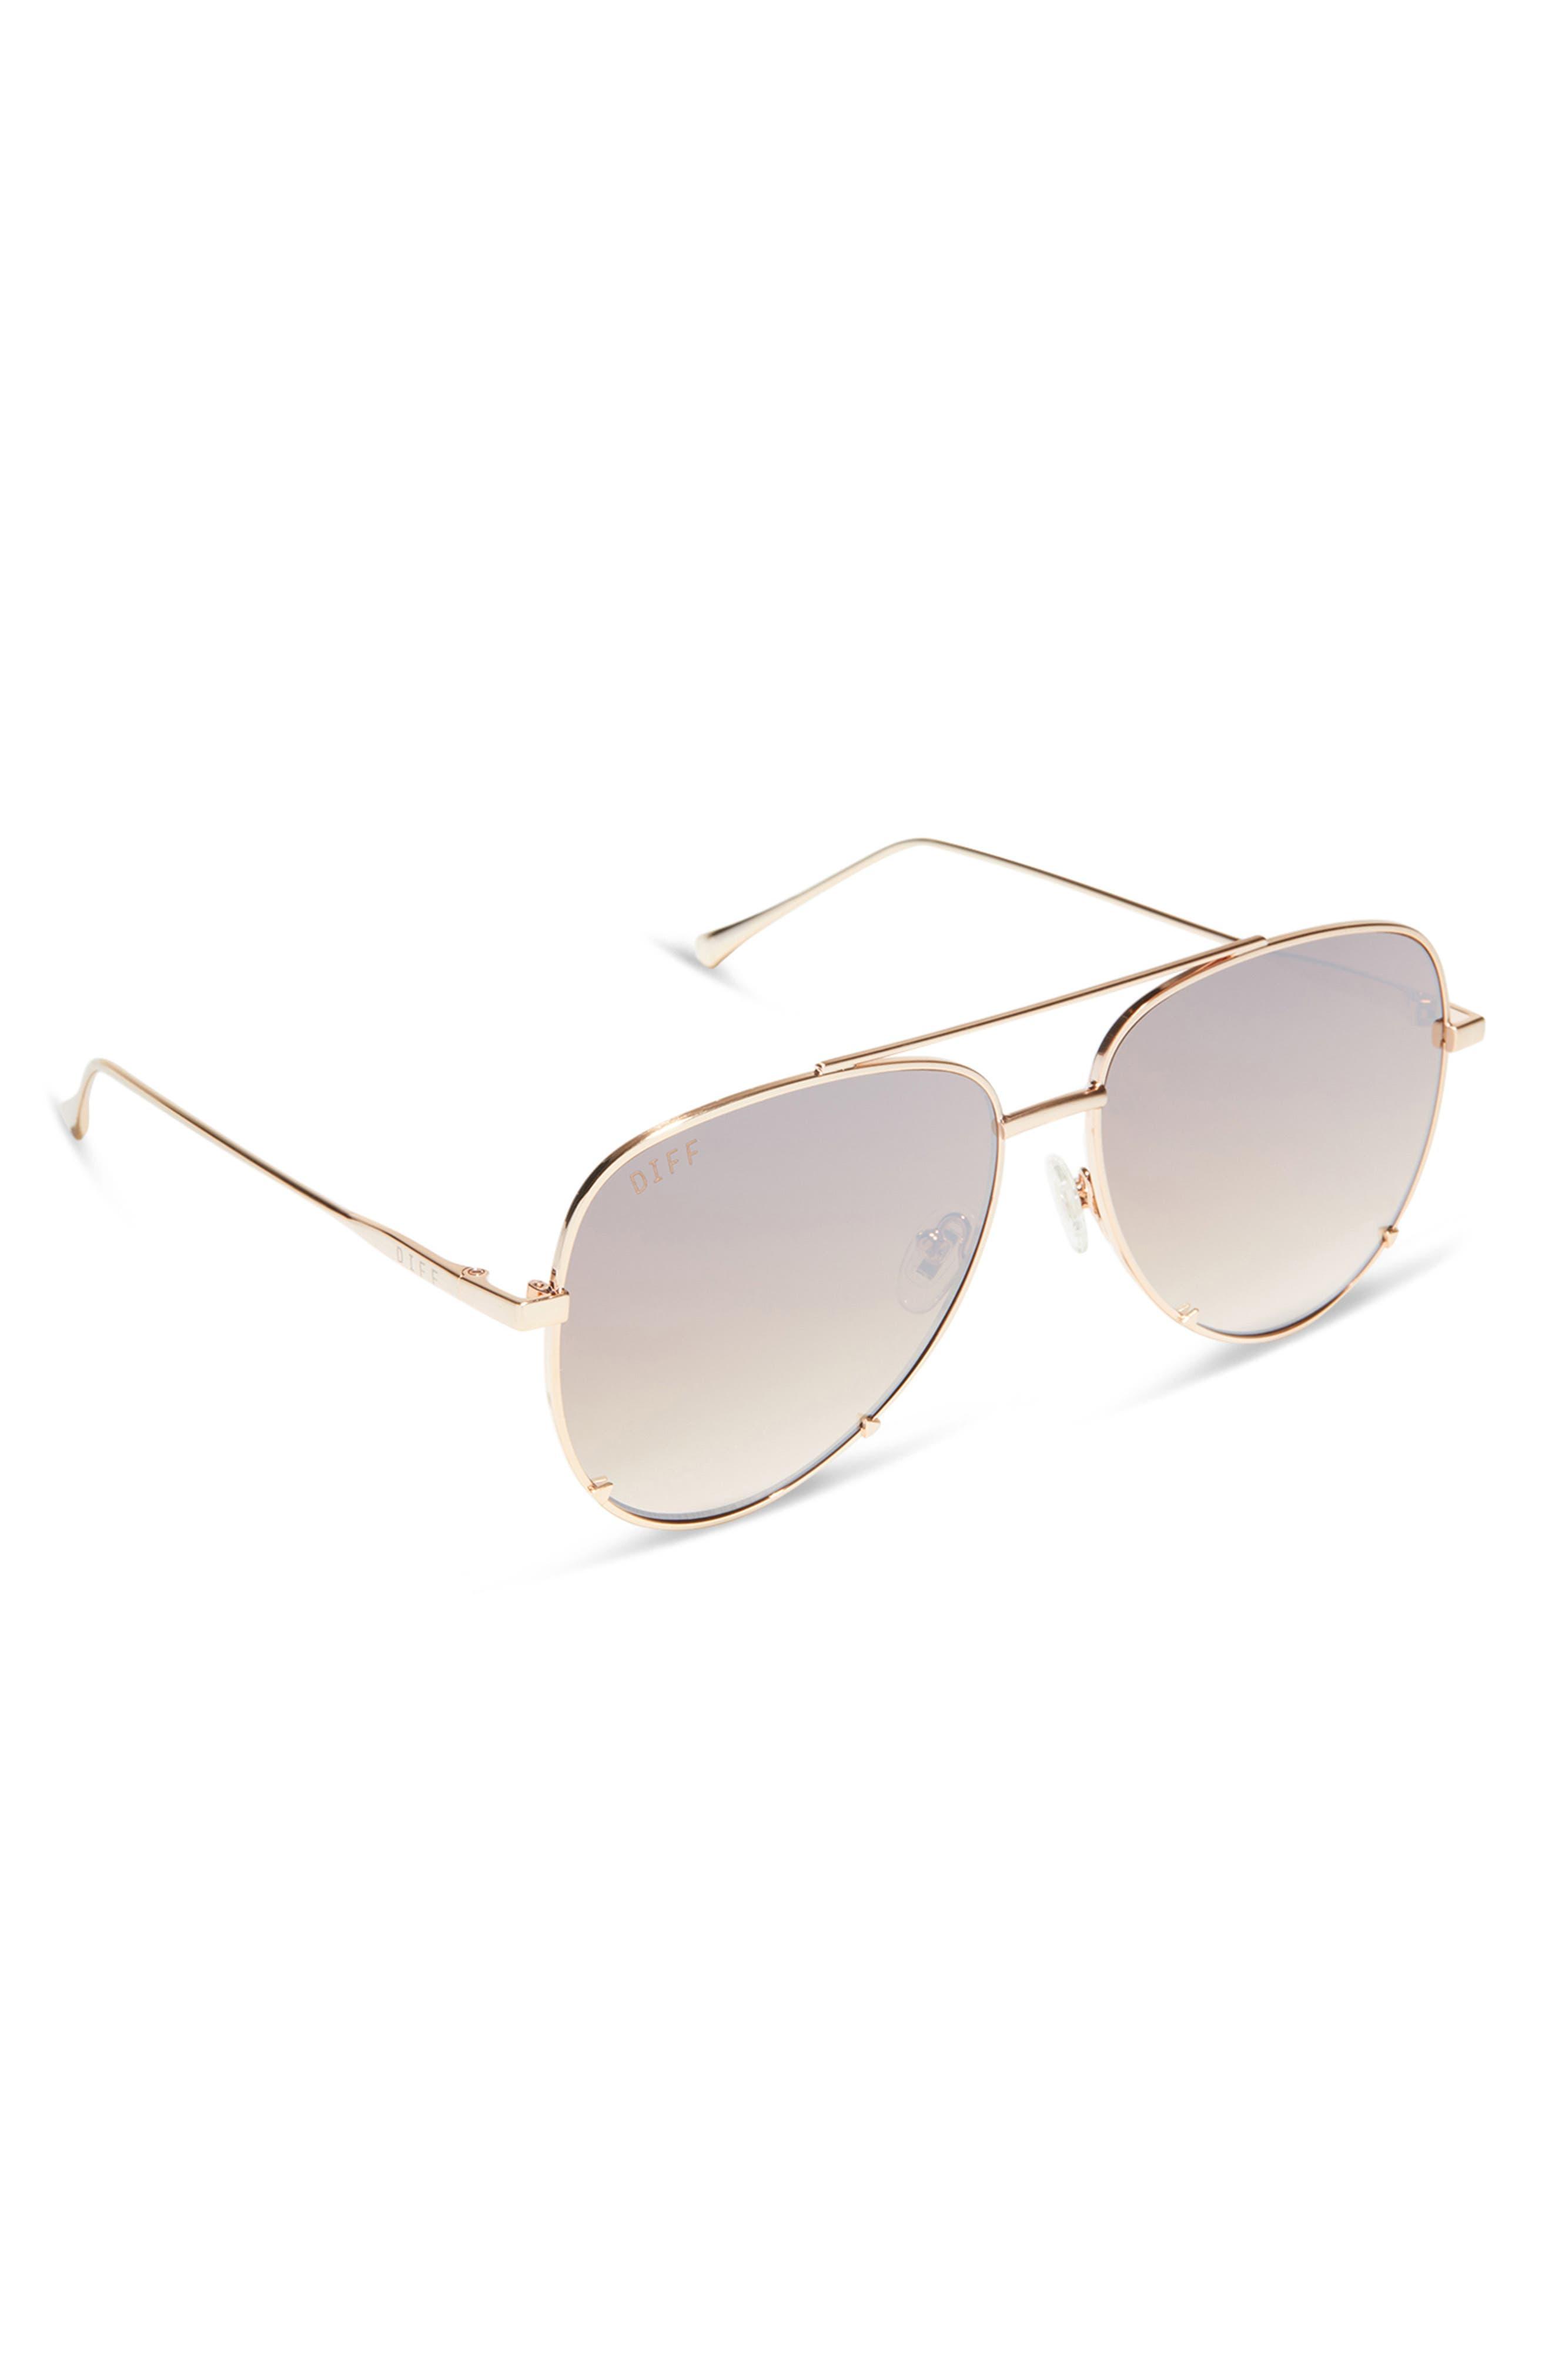 DIFF 63mm Scarlett Aviator Sunglasses in Metallic | Lyst